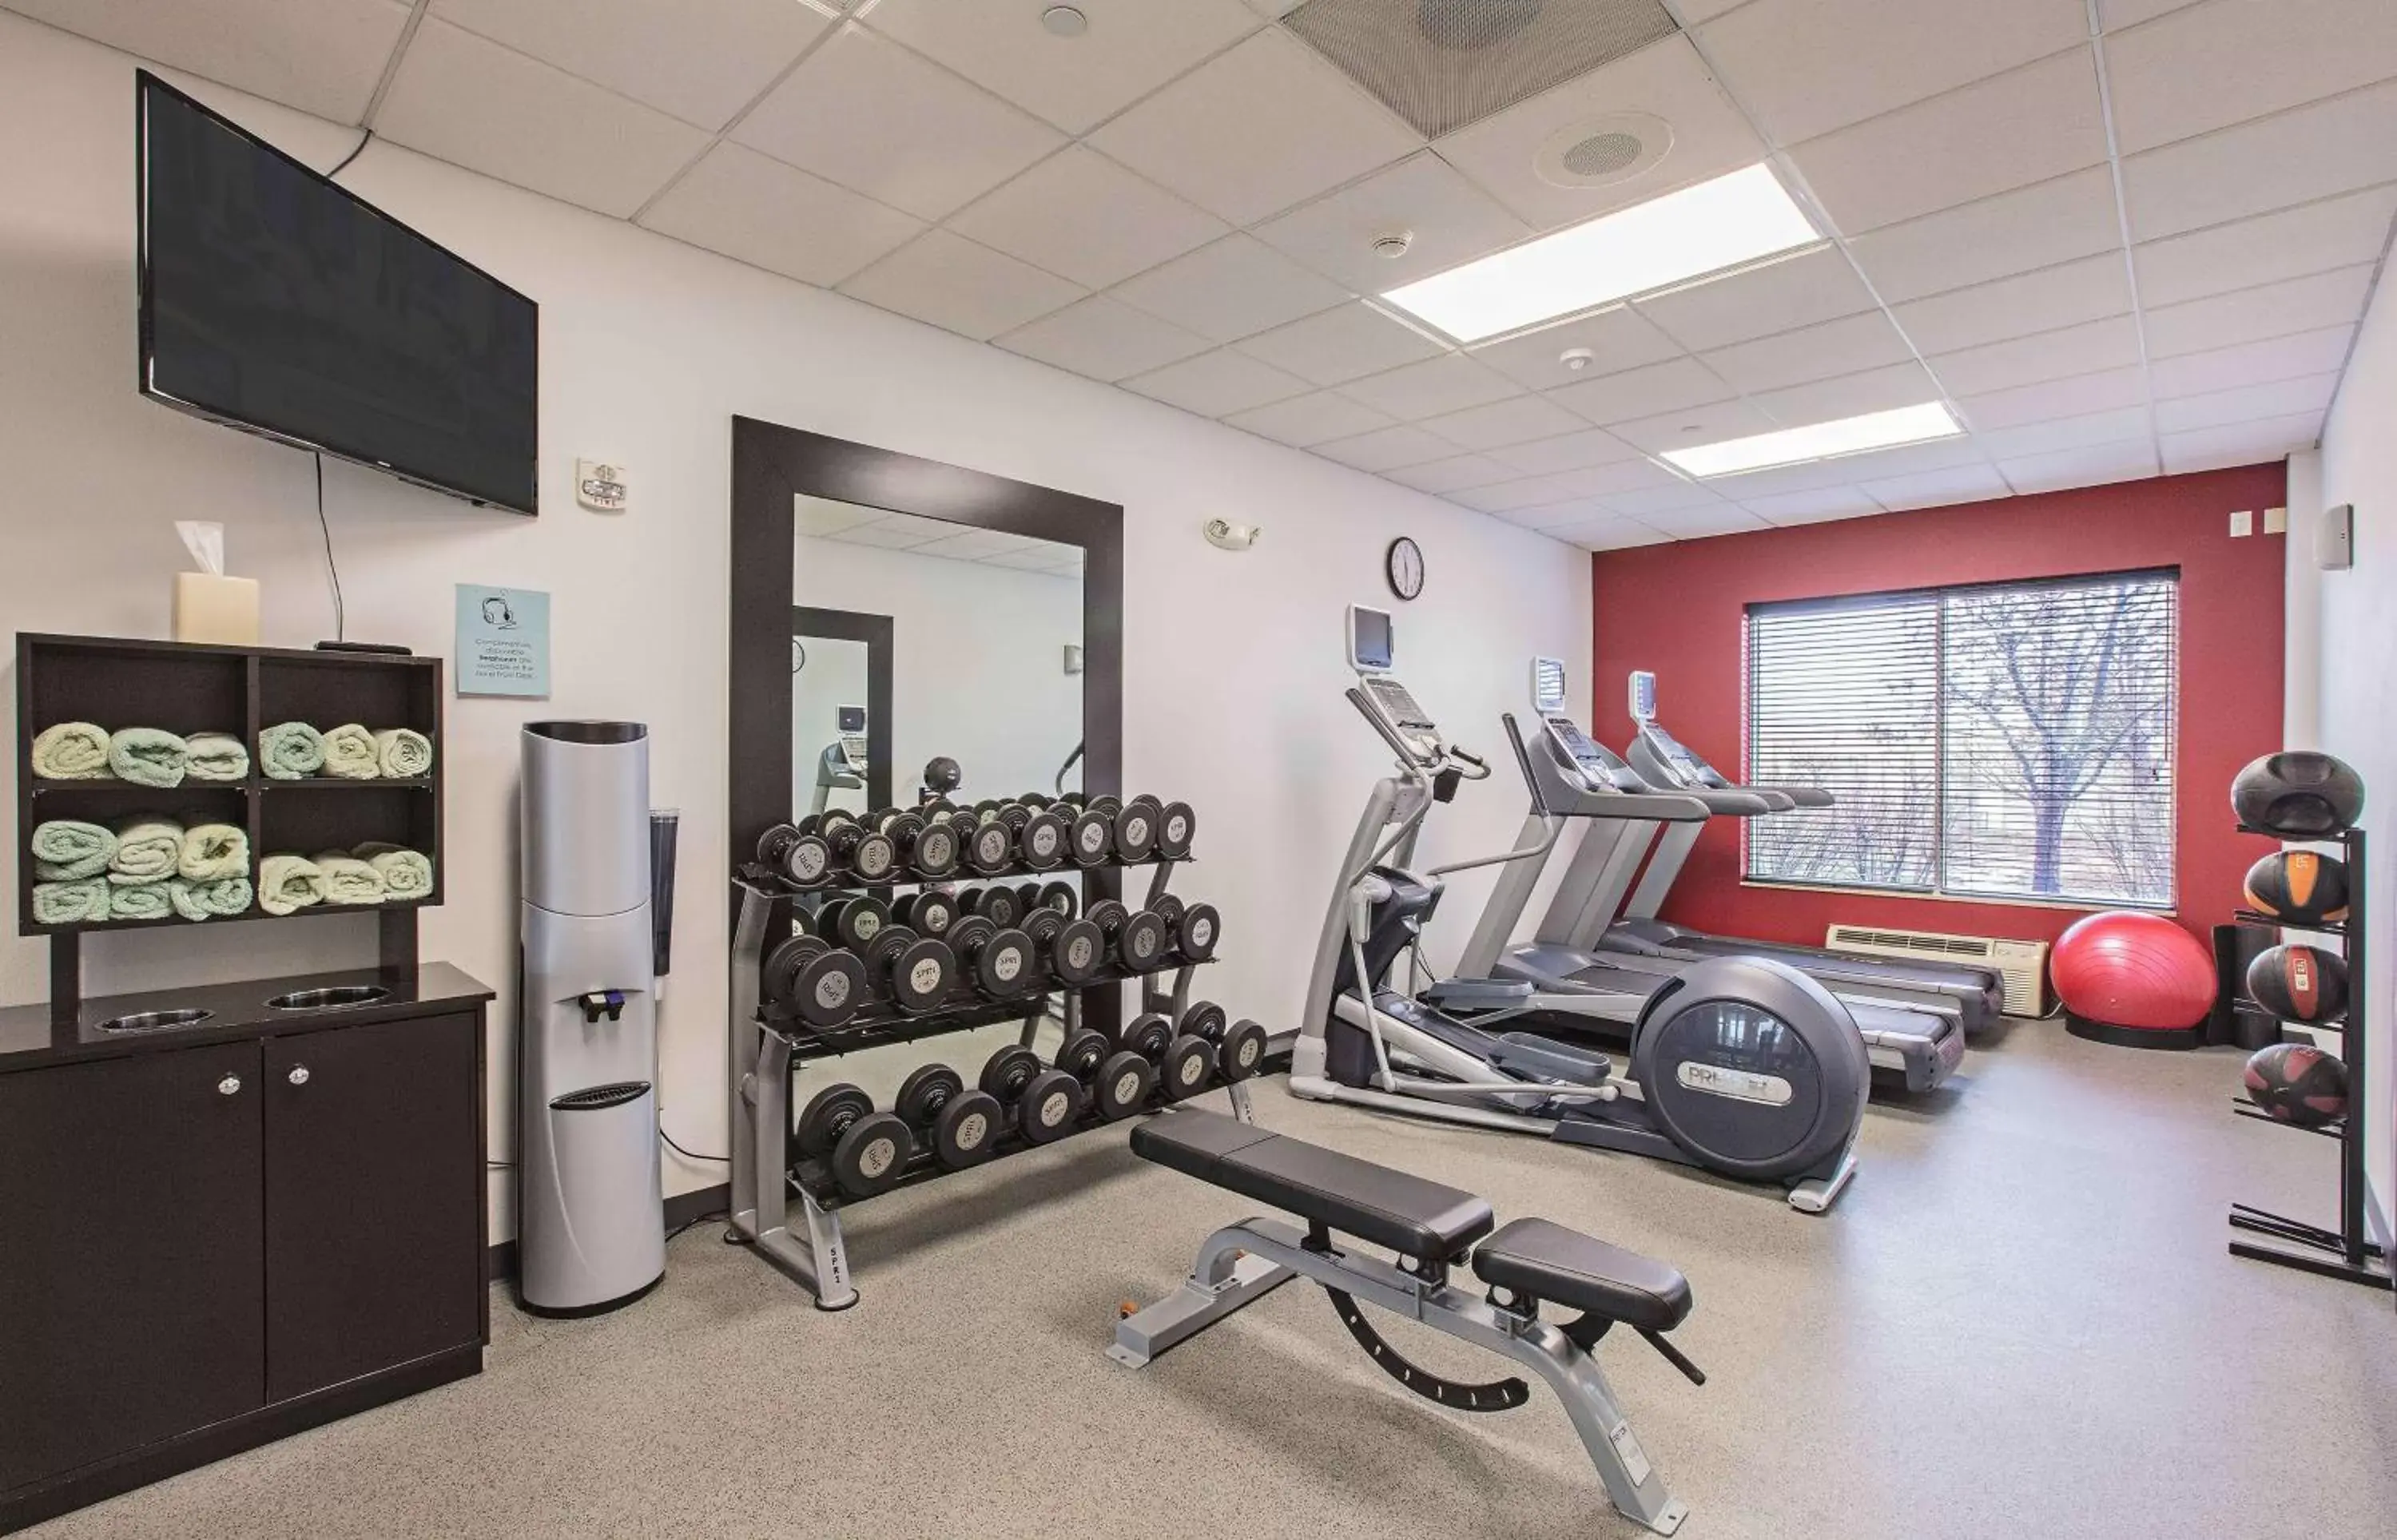 Fitness centre/facilities, Fitness Center/Facilities in Hilton Garden Inn Des Moines/Urbandale